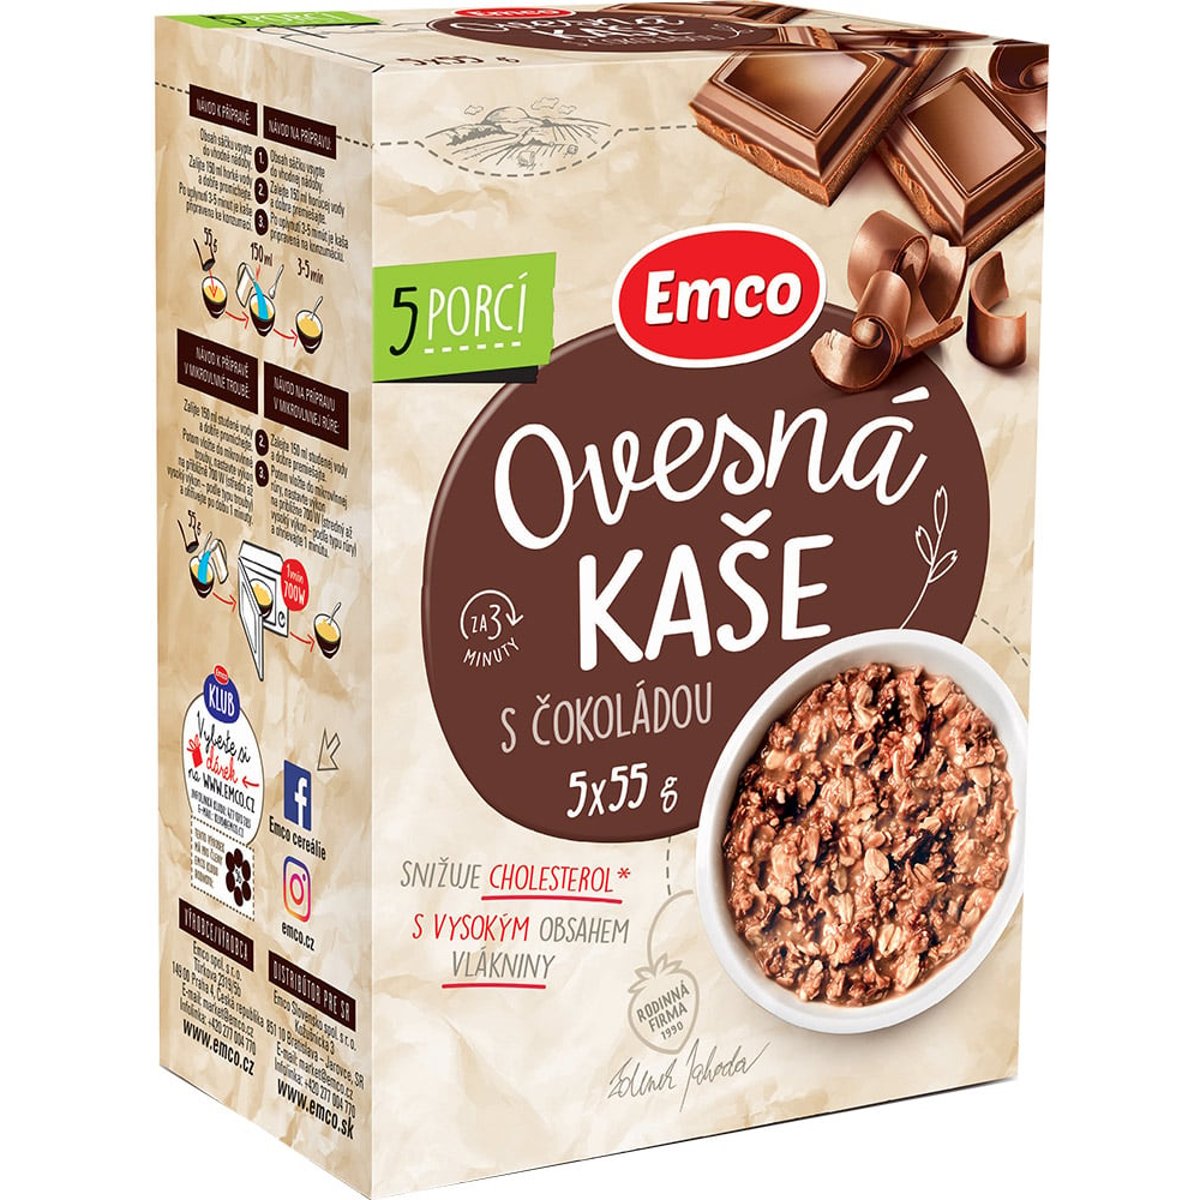 Emco Ovesná kaše s čokoládou 5x55g